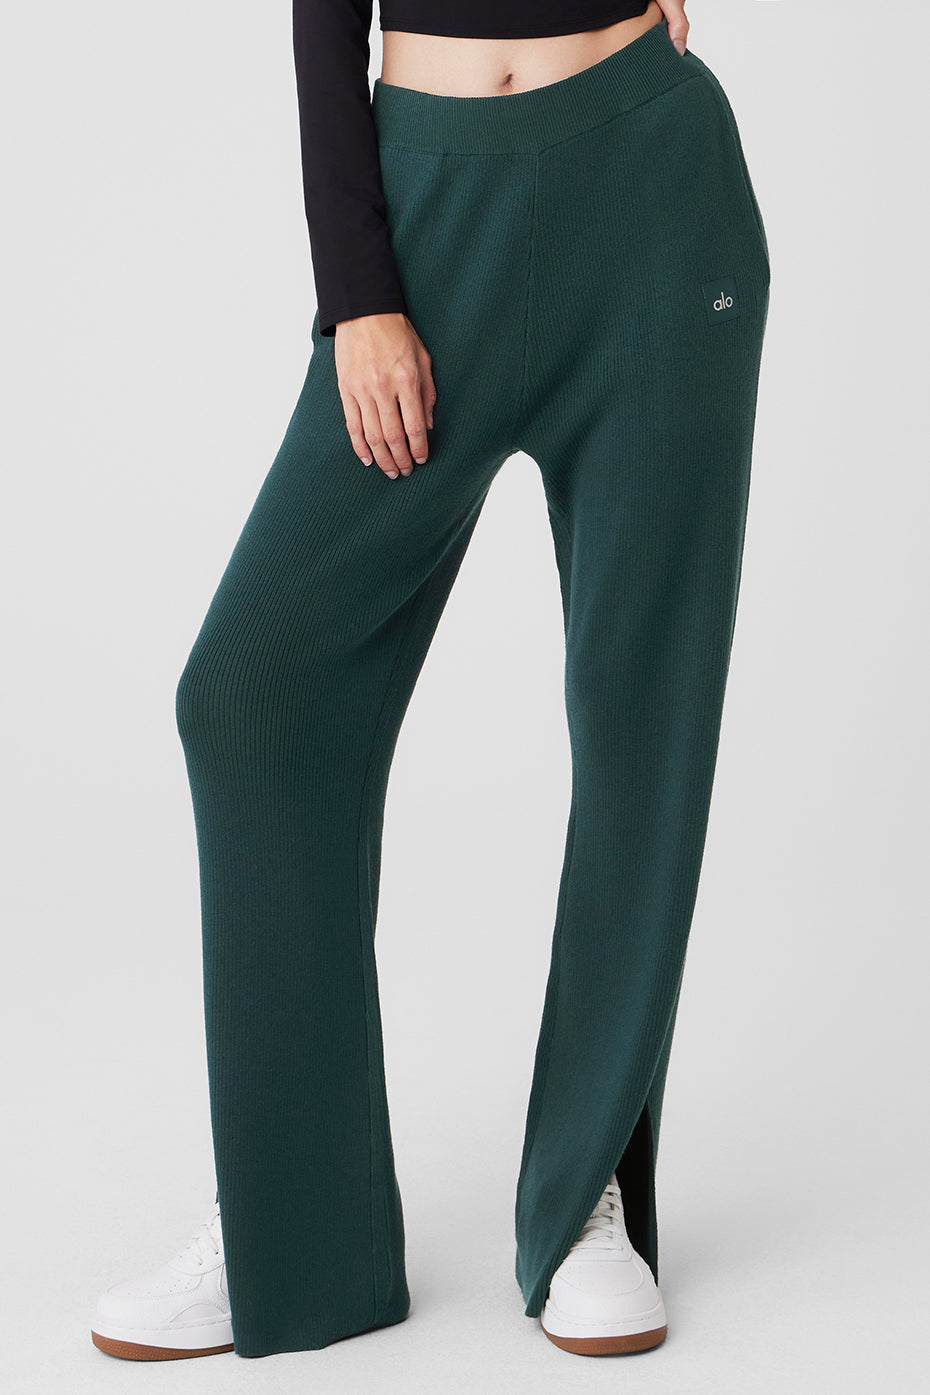 YUHAOTIN Yoga Pants with Zip Yoga Pants for Women Straight Leg